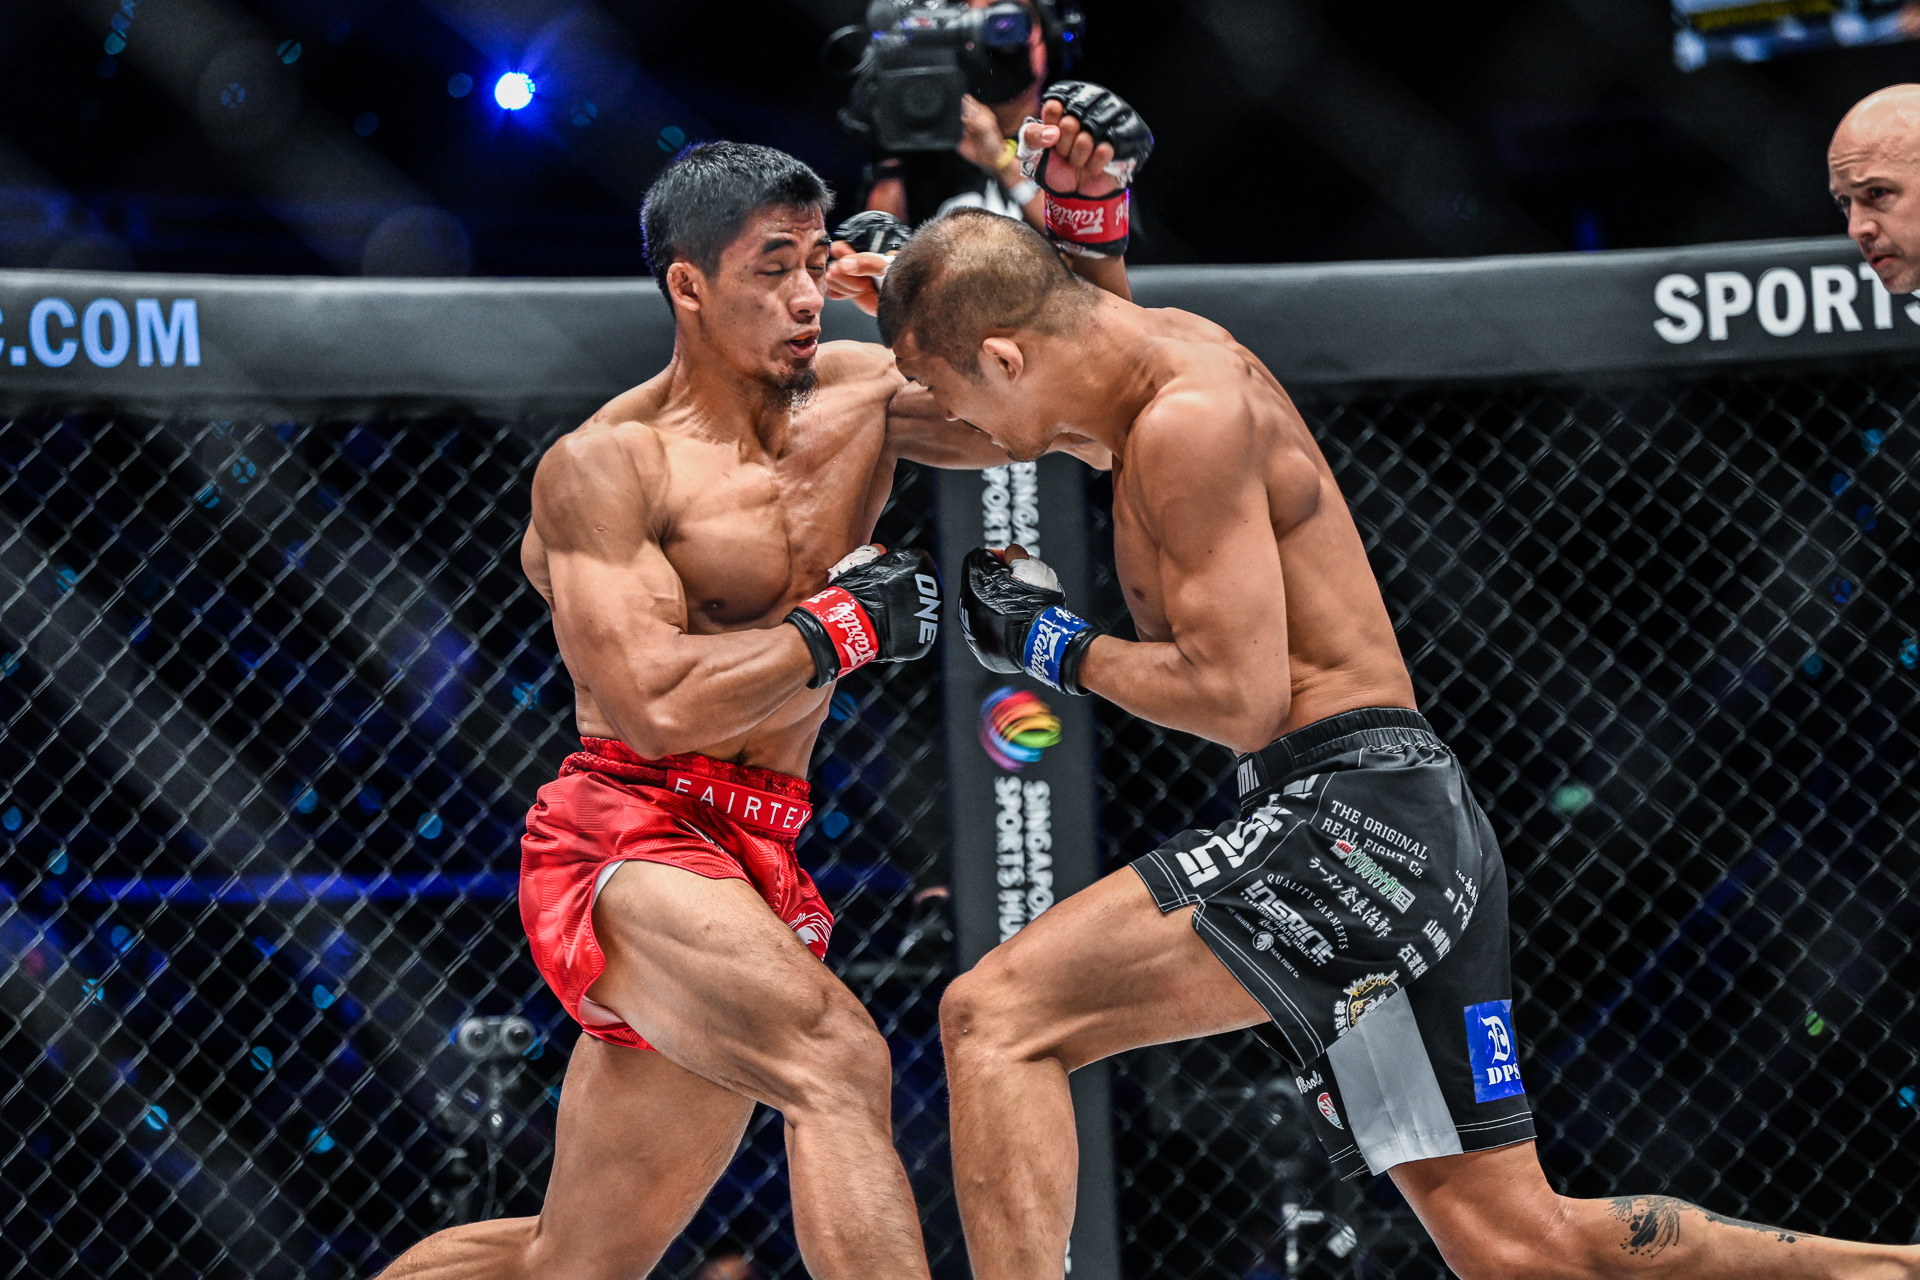 ONE-X-Jeremy-Miado-def-Lito-Adiwang-3 Potential title shot awaits Stephen Loman after beating Shoko Sato at ONE X Mixed Martial Arts News ONE Championship  - philippine sports news